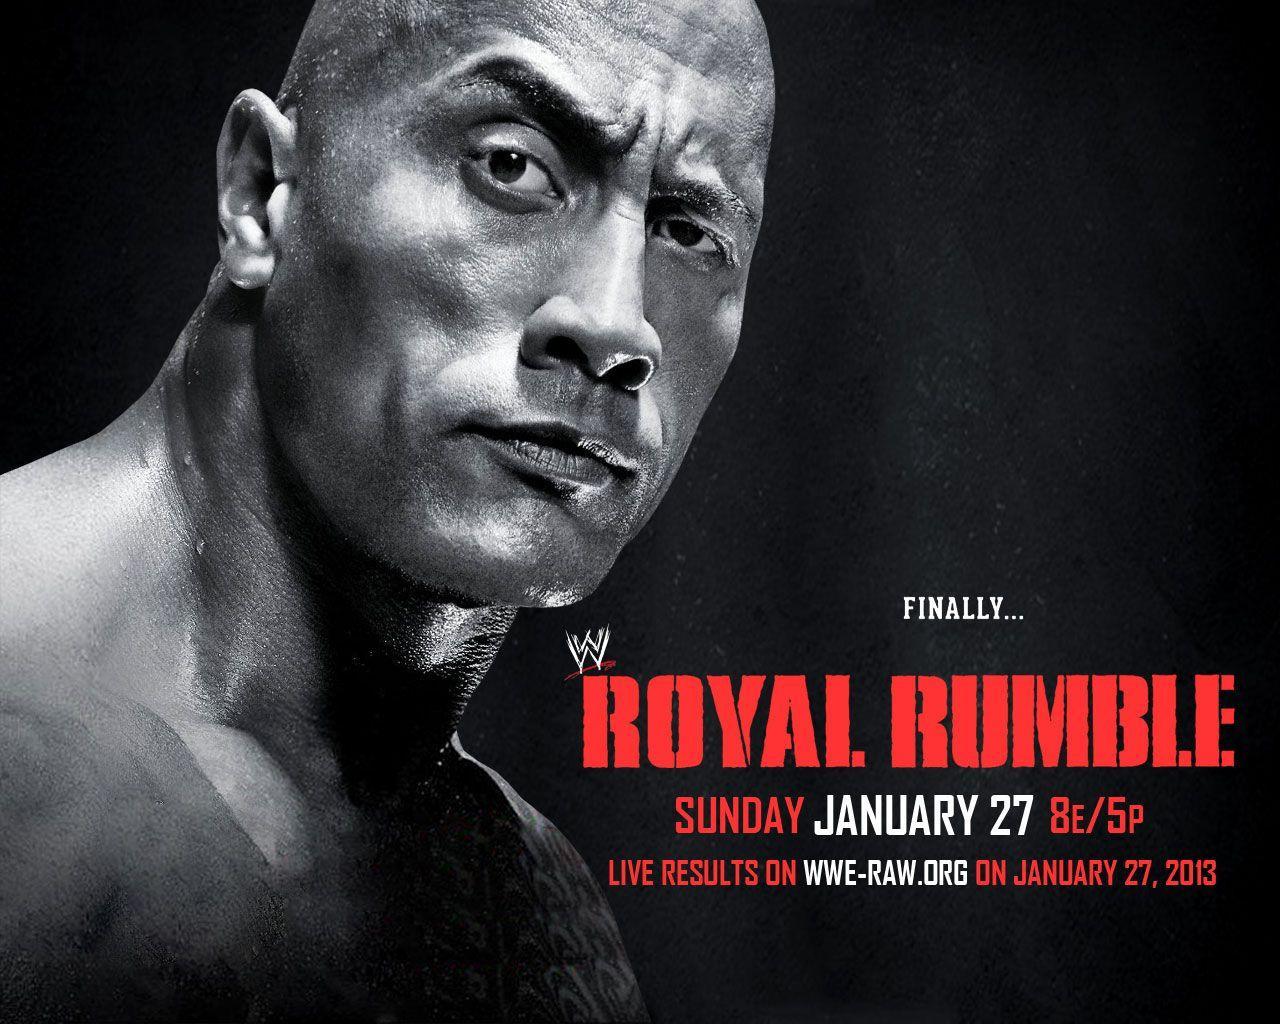 WWE Royal Rumble 2013 Photo Wallpaper Promo Videos. A Sports News